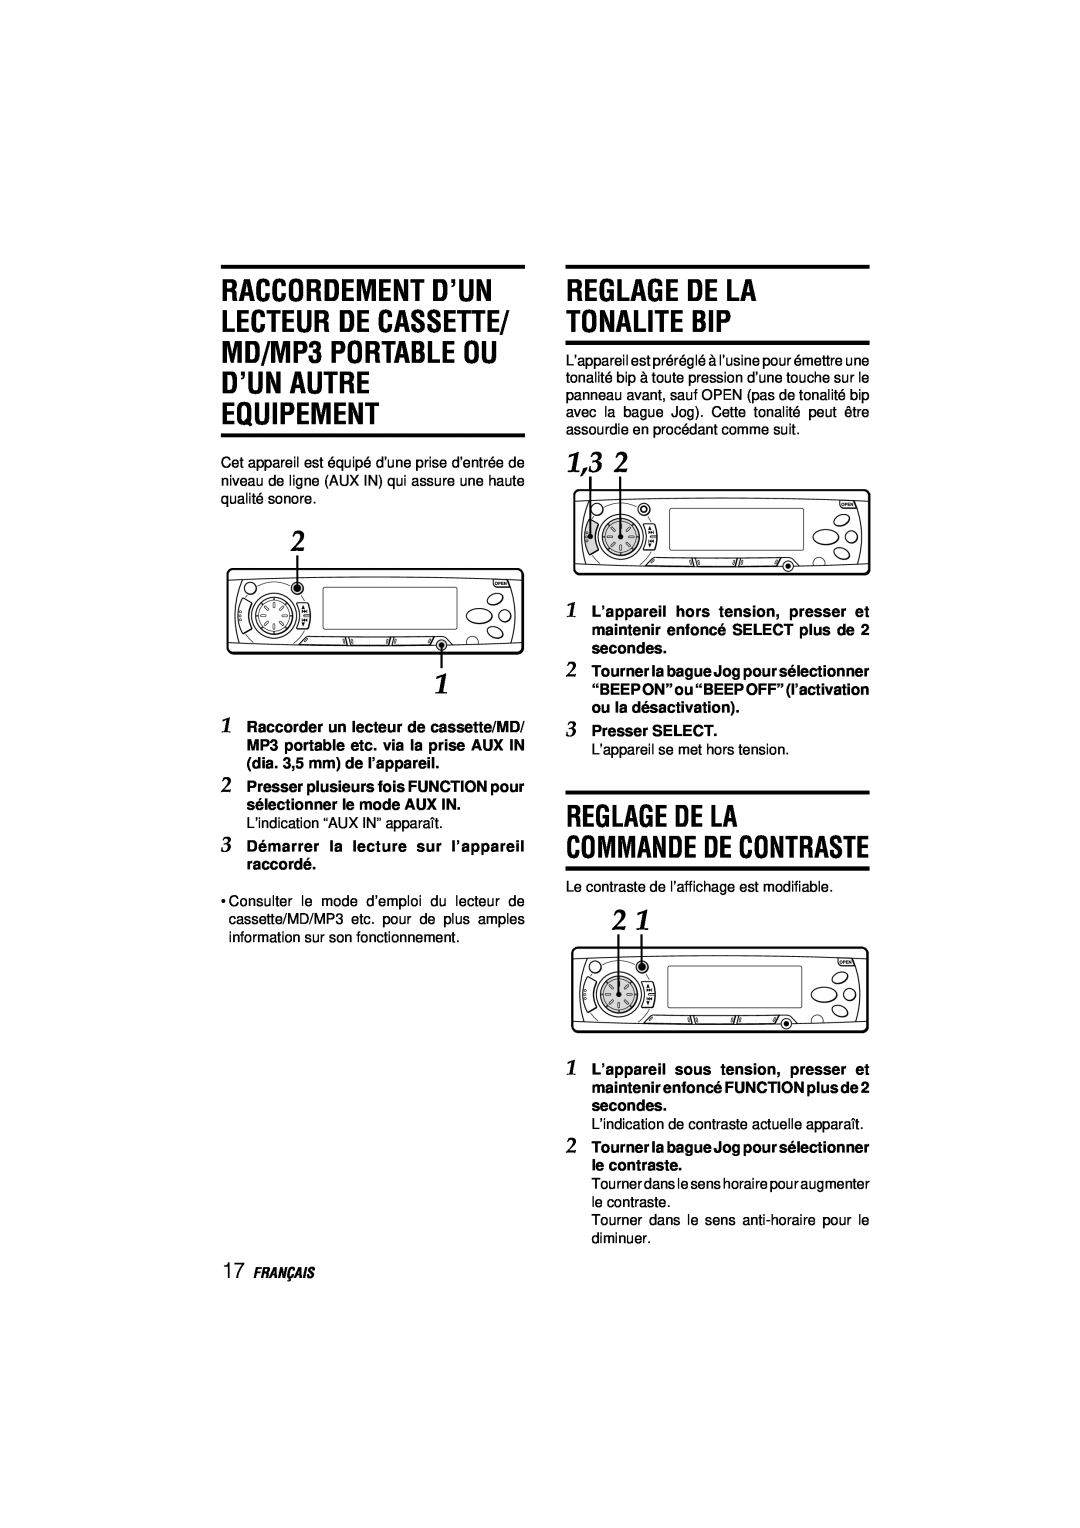 Aiwa CDC-MP3 manual Reglage De La Tonalite Bip, Reglage De La Commande De Contraste, Français 